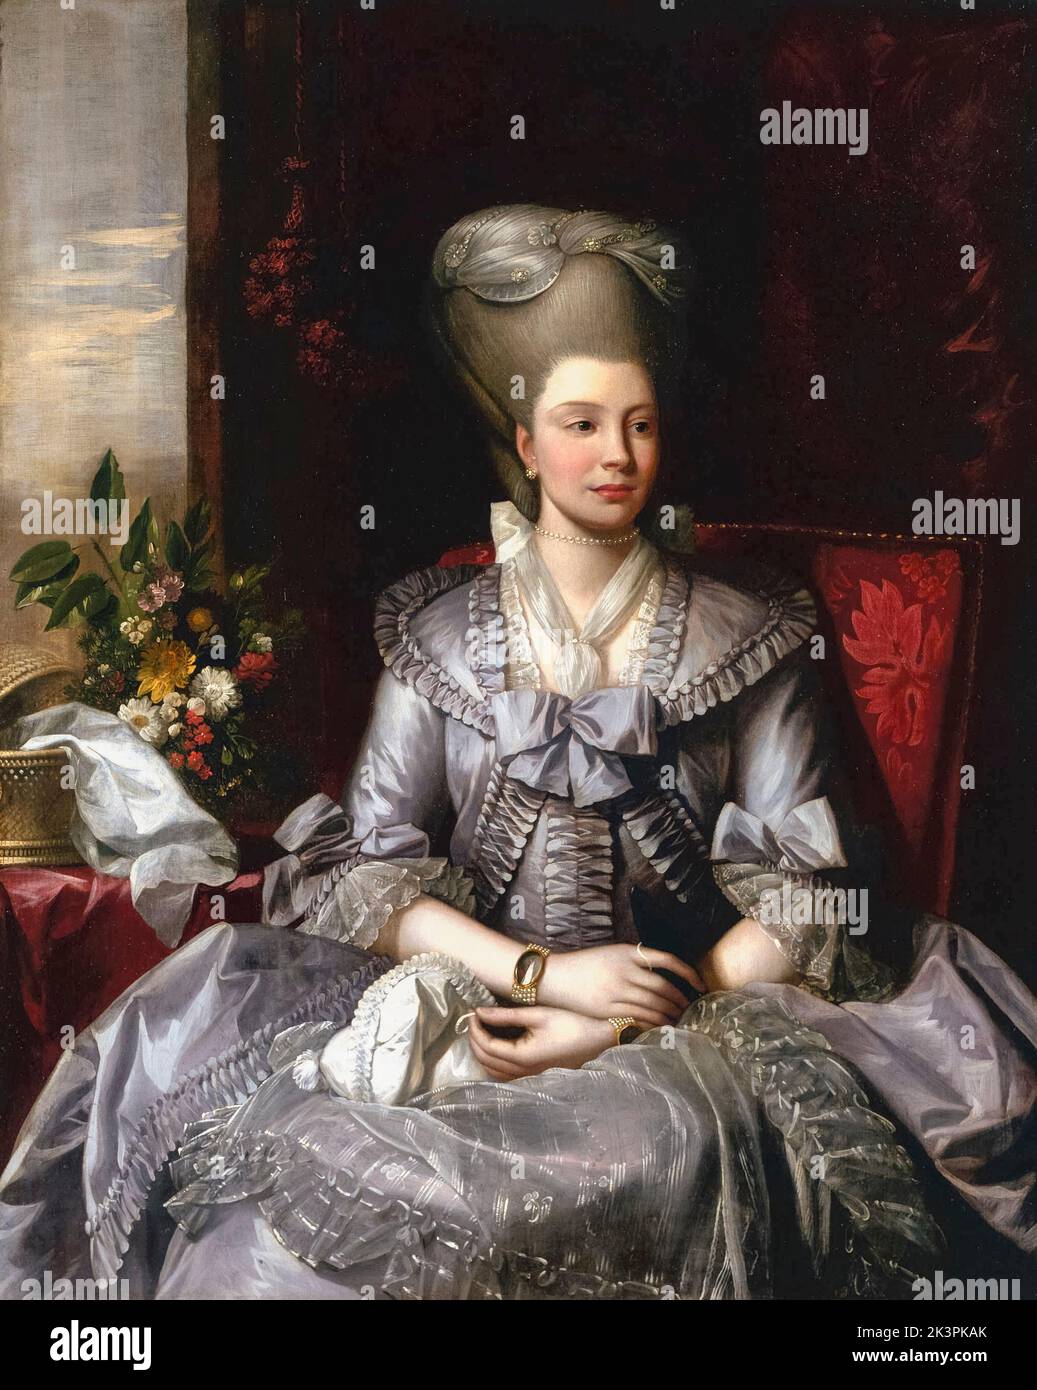 La reina Charlotte de Mecklenburg-Strelitz (1744-1818), la reina Consort del Reino Unido, retrato al óleo sobre lienzo de Benjamin West, hacia 1776 Foto de stock